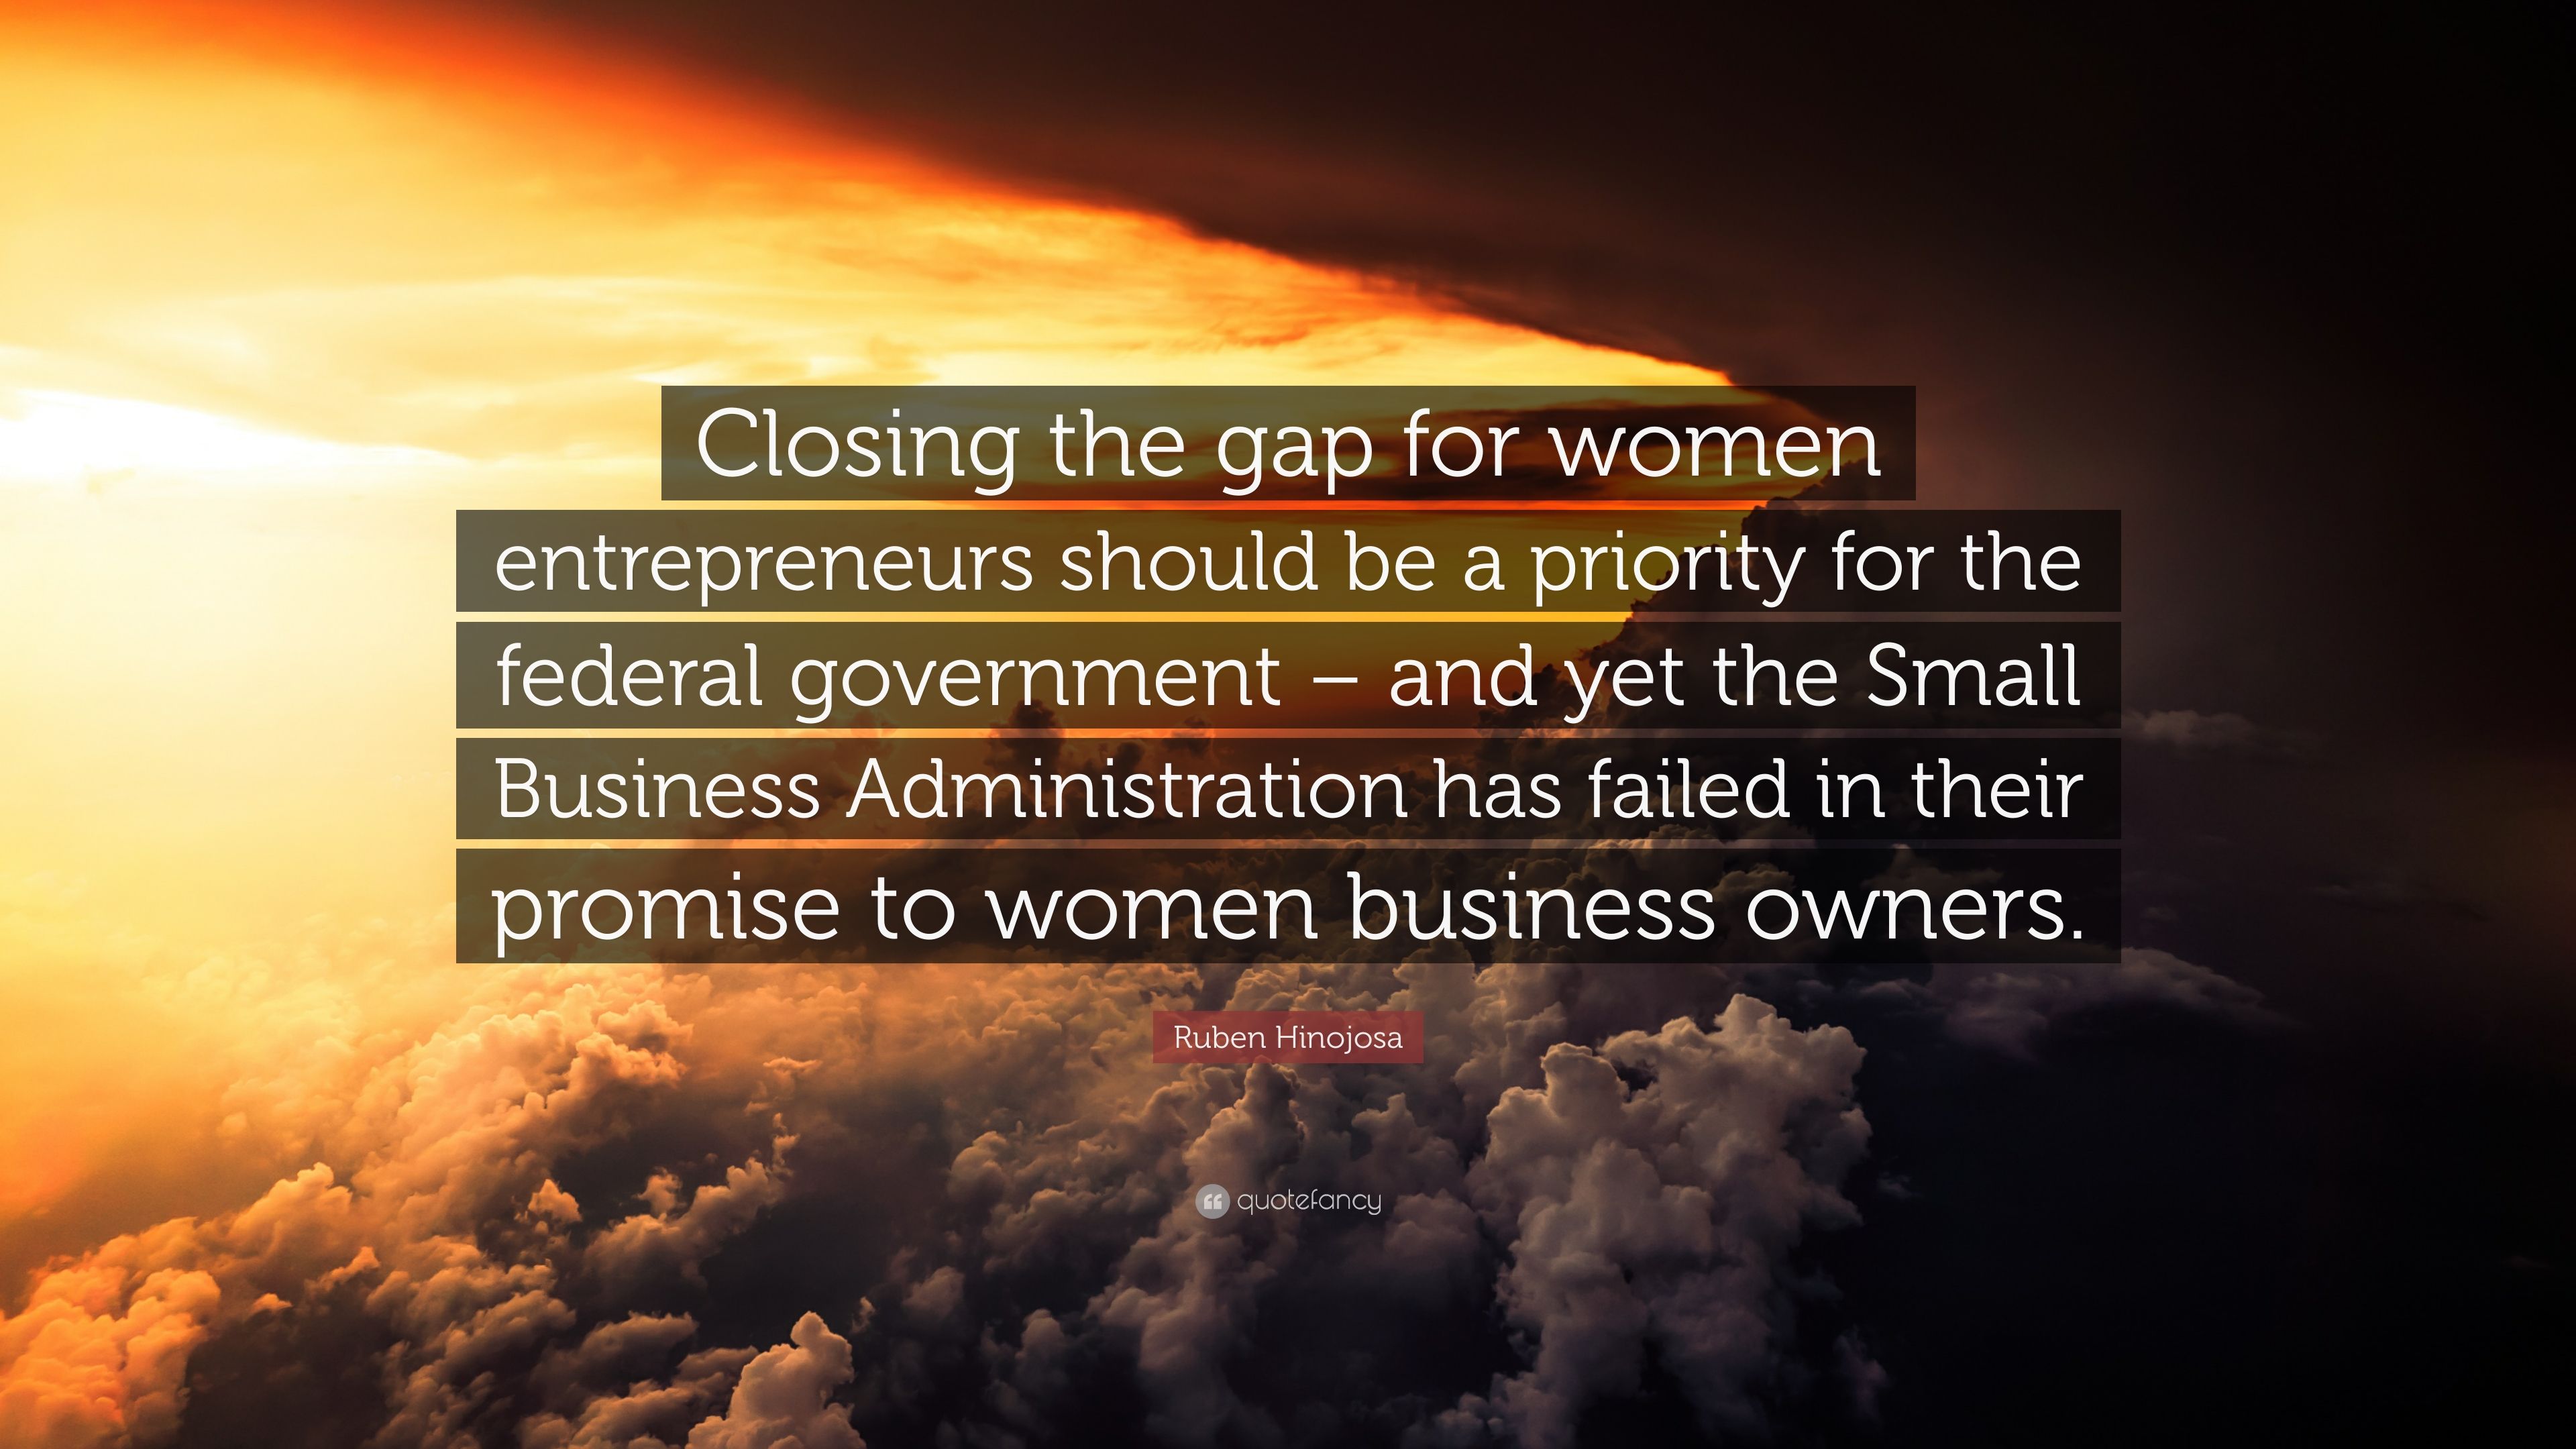 Ruben Hinojosa Quote: “Closing the gap for women entrepreneurs